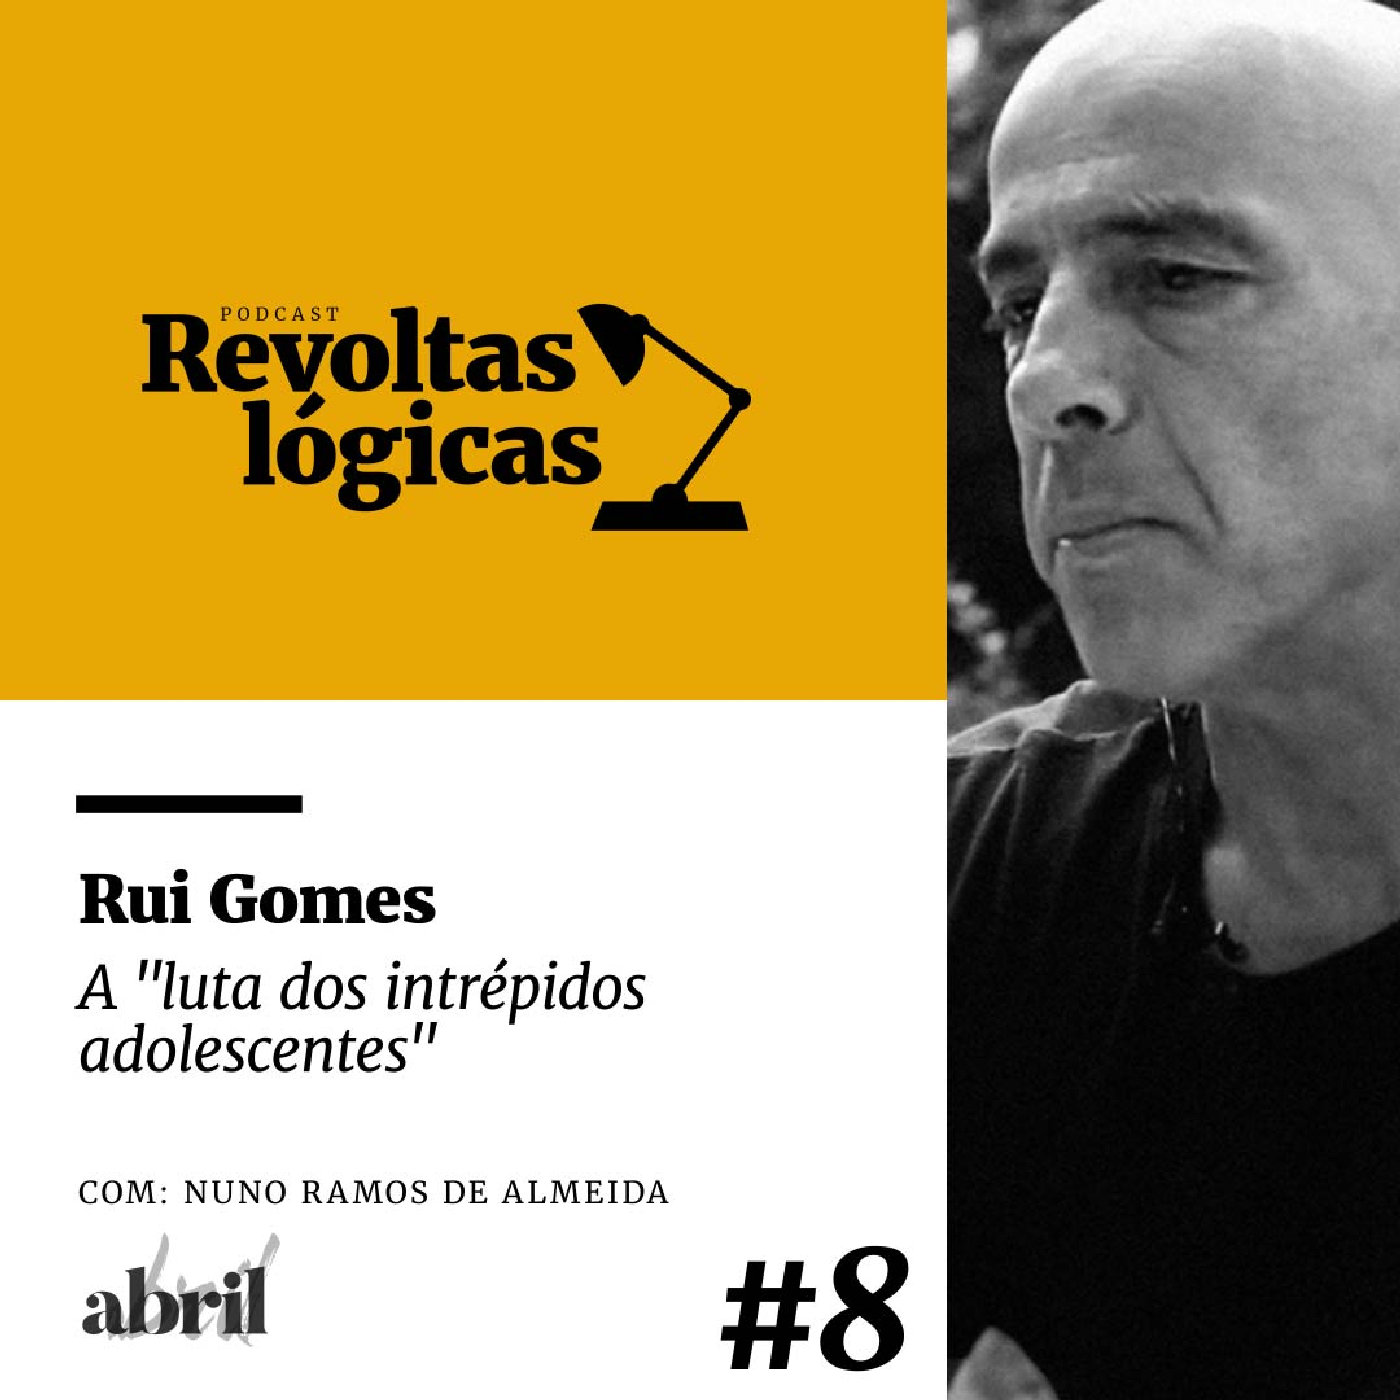 Revoltas lógicas #8 - Rui Gomes - A "luta dos intrépidos adolescentes"